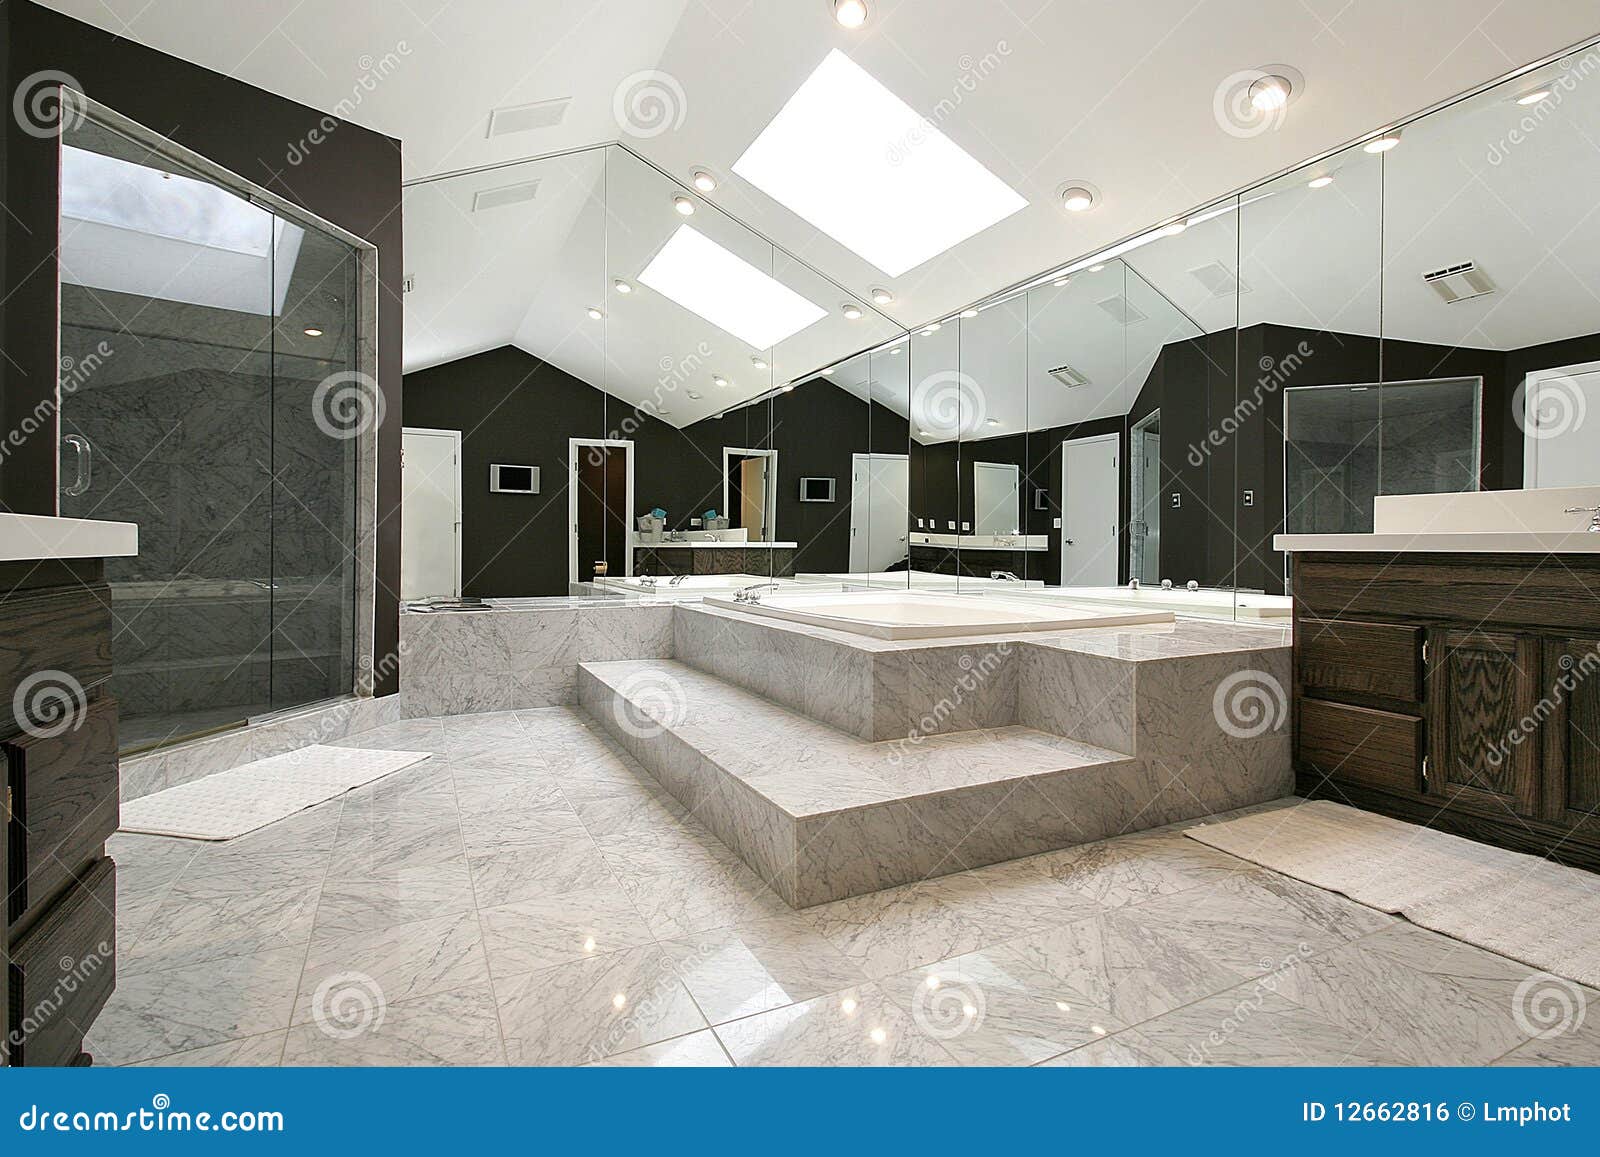 master bath in luxury home